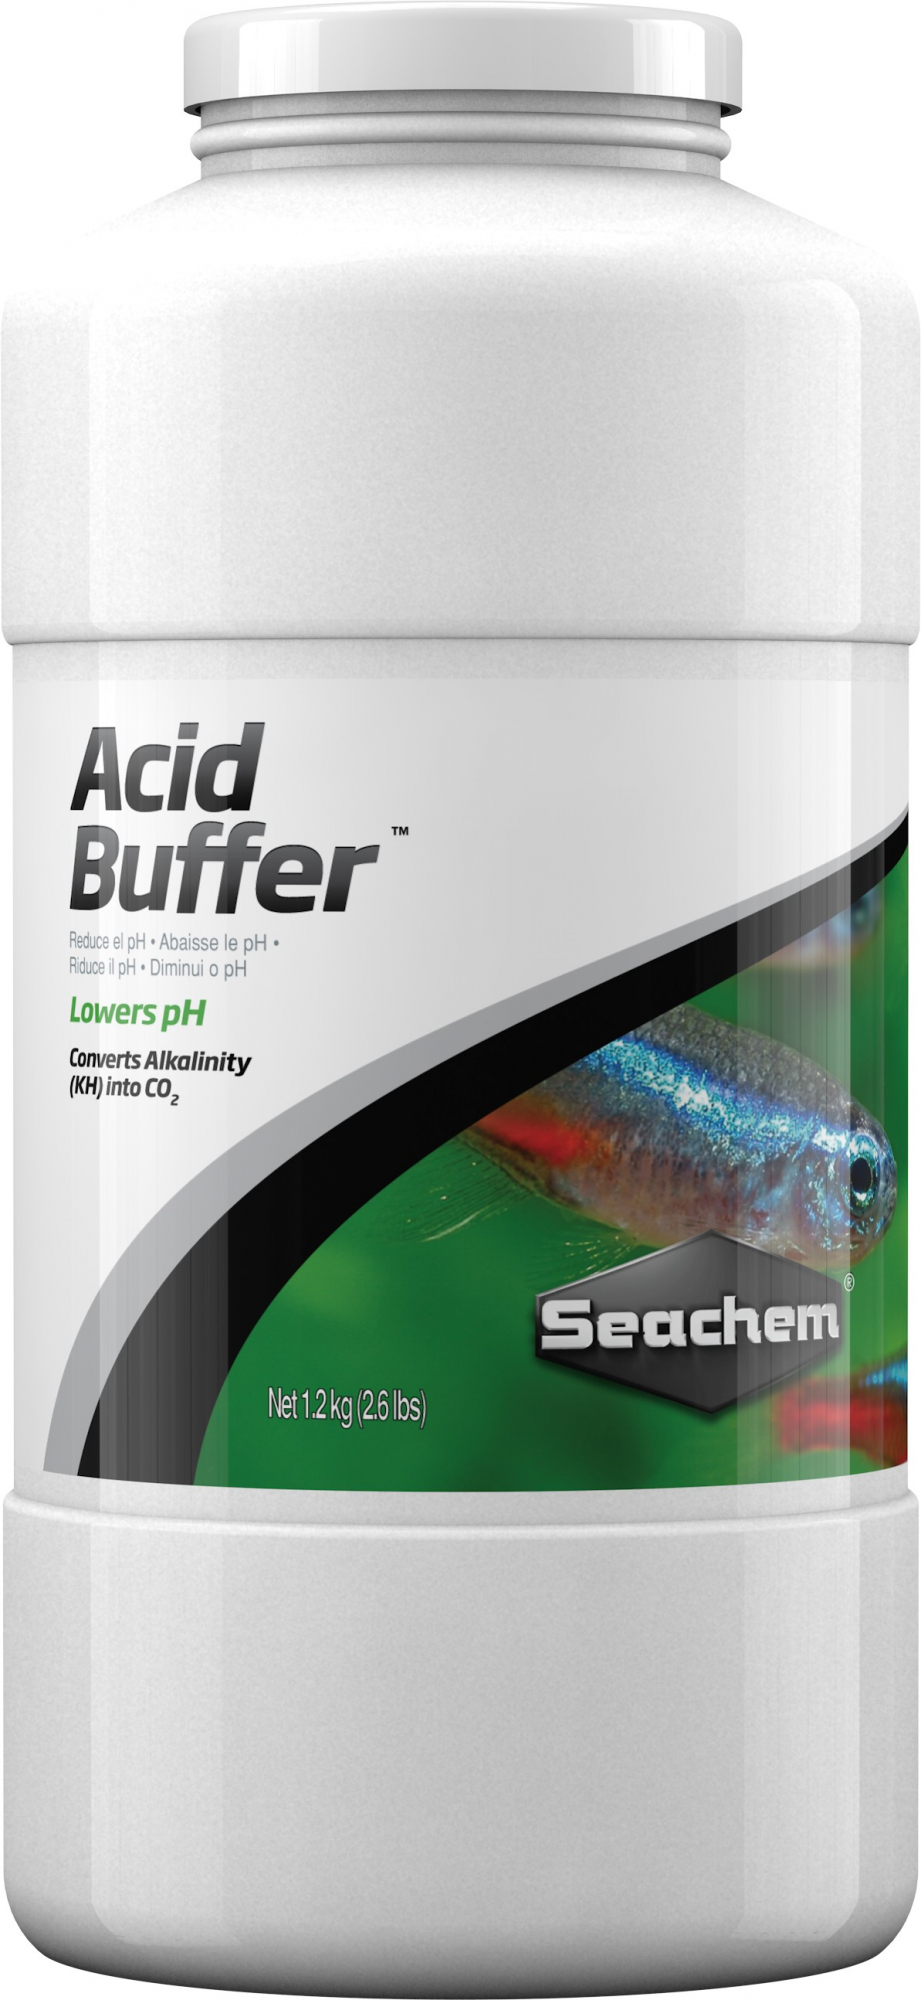 Acid Buffer - SEACHEM - diminuzione del PH